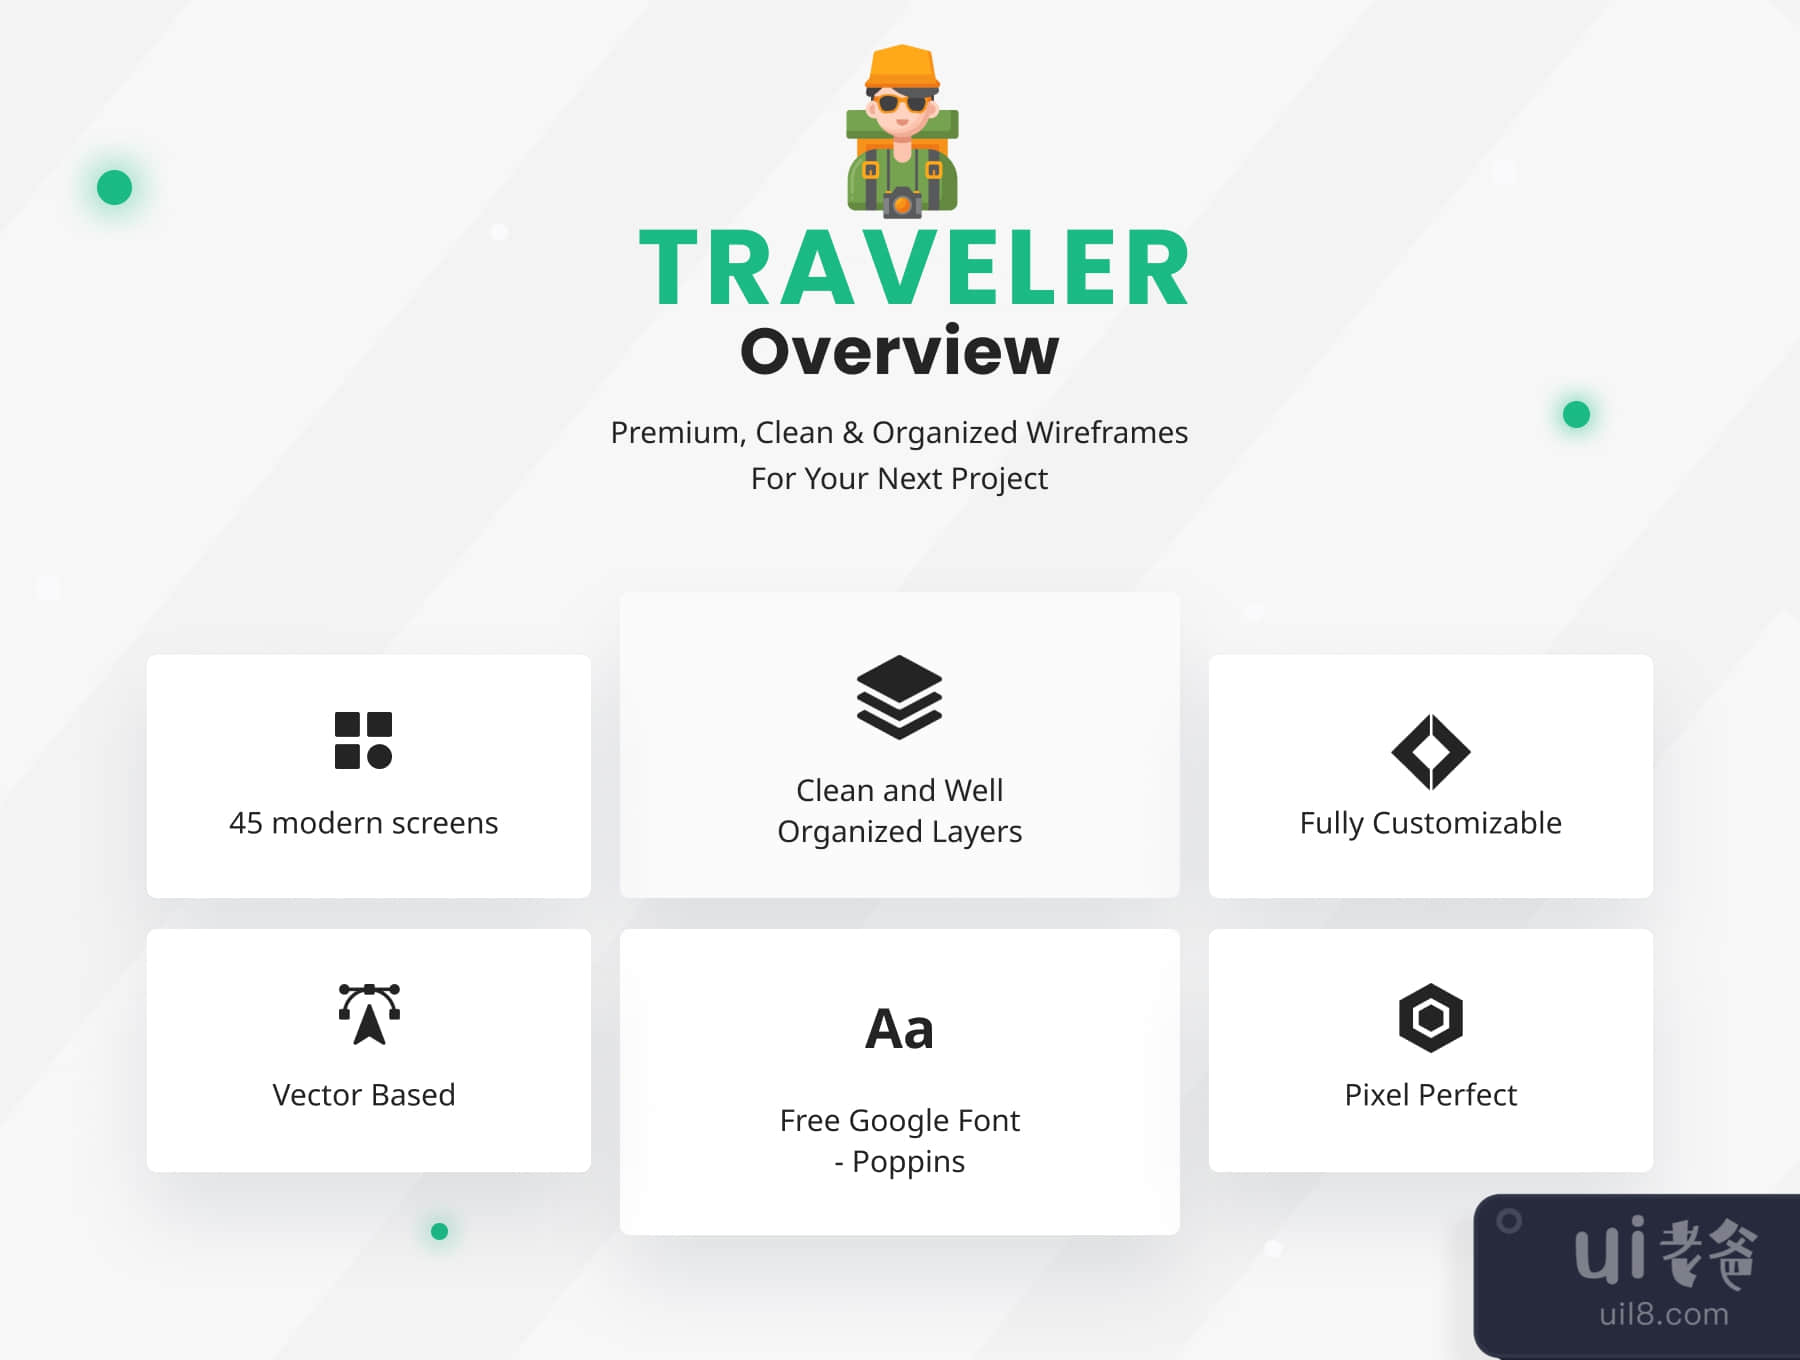 旅行者 - 旅行和酒店预订应用程序 (Traveler - Travelling And Hotel Booking App)插图